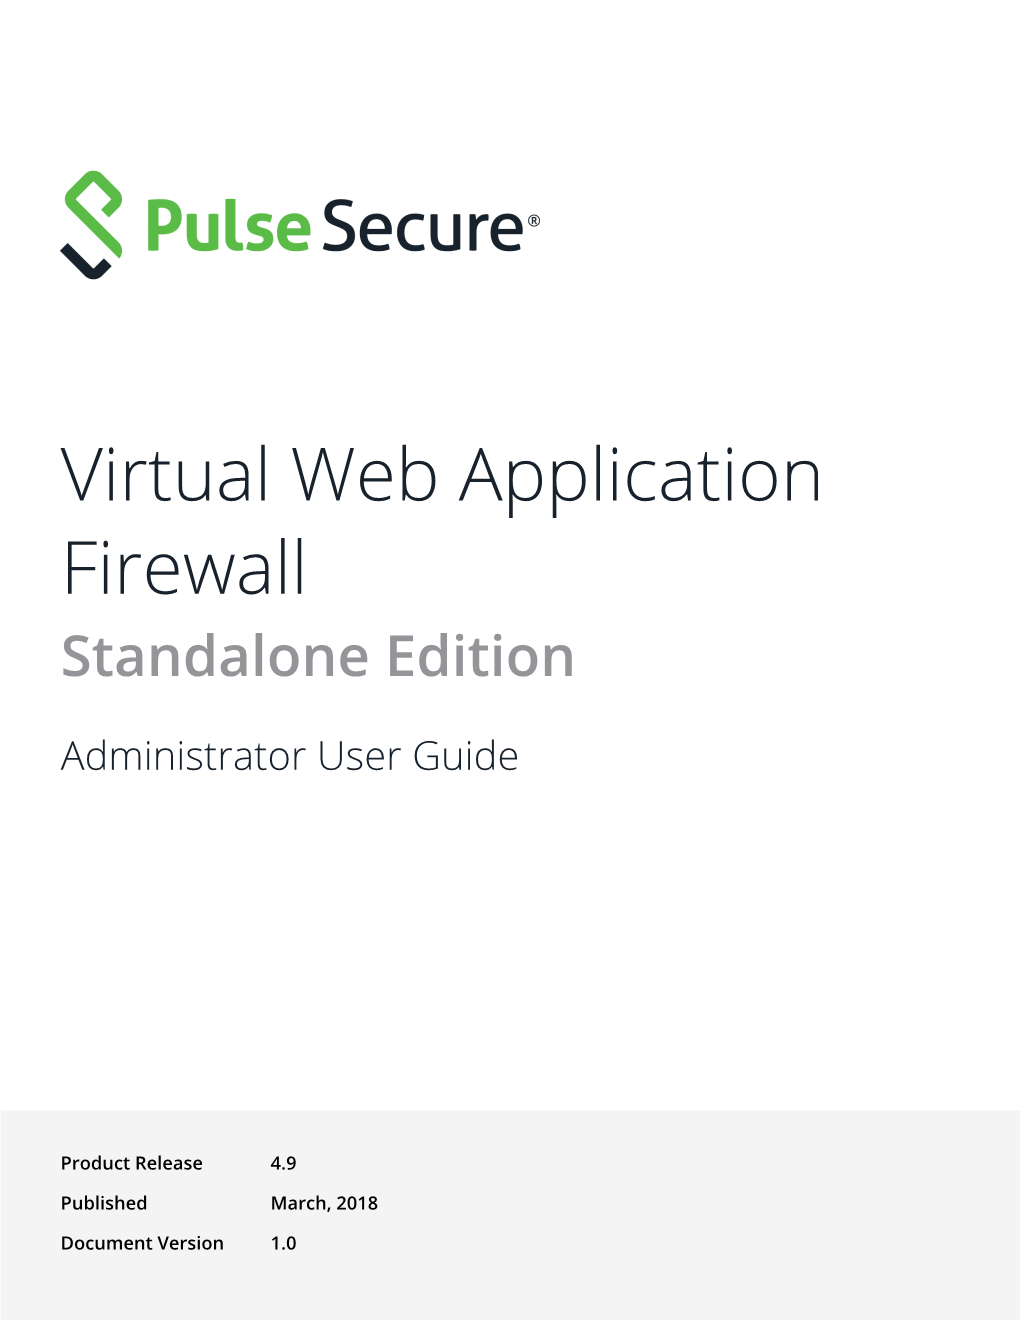 Pulse Secure Virtual Web Application Firewall User Guide